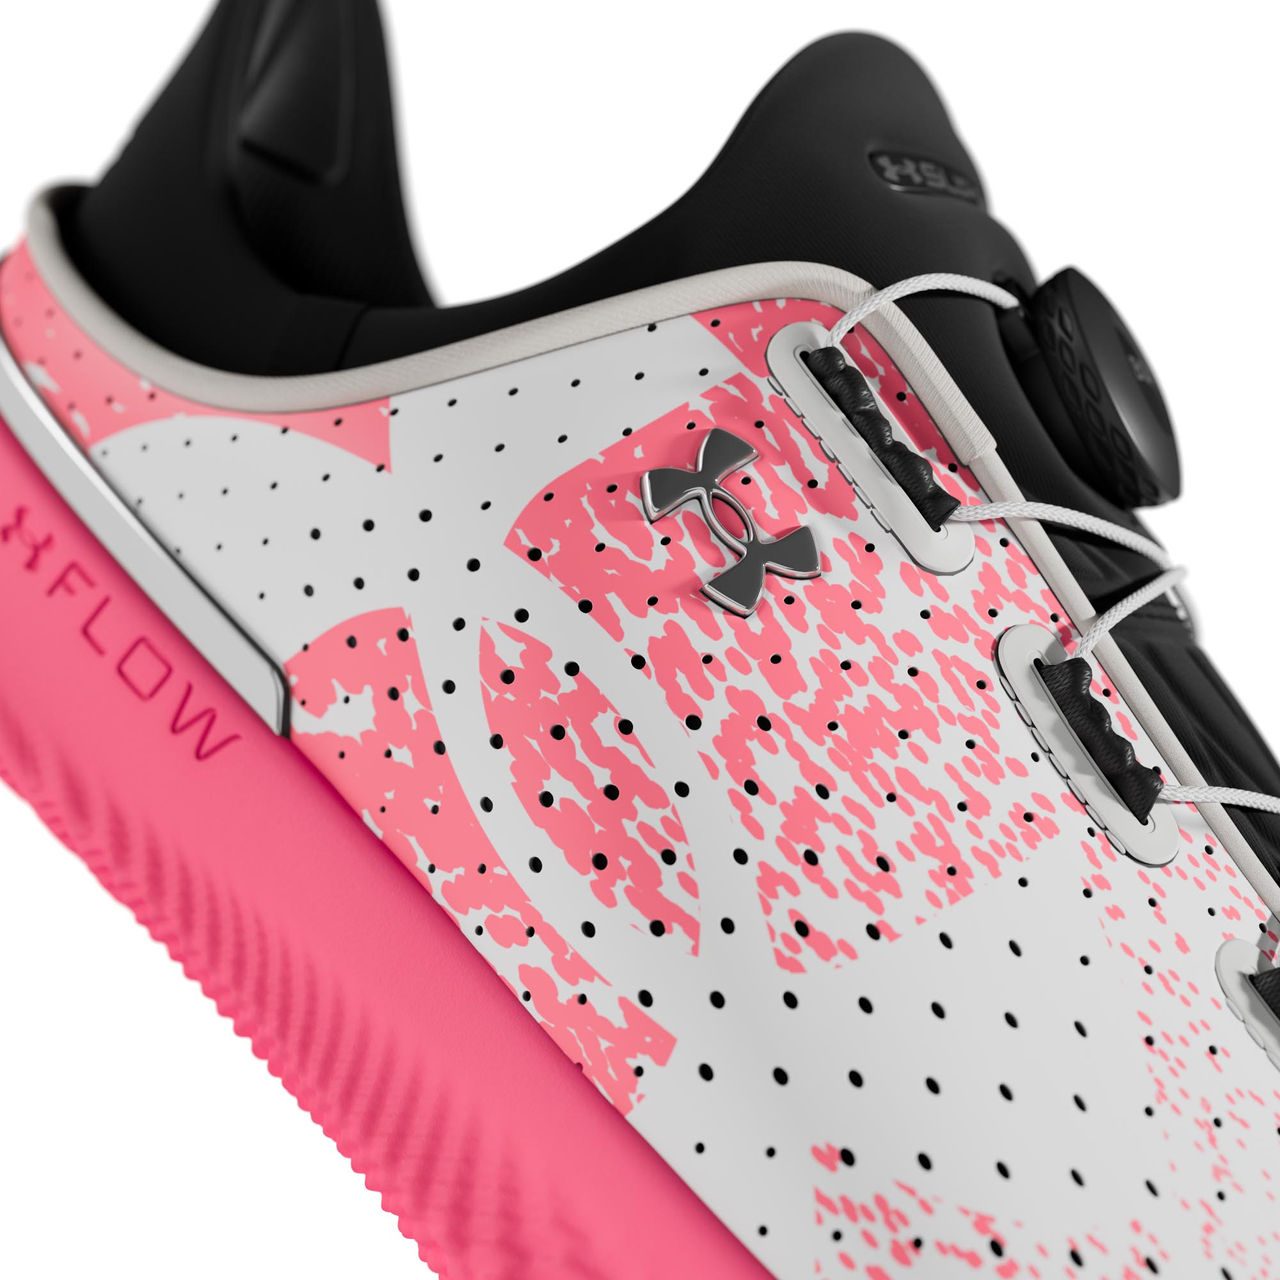 Introducing UA SlipSpeed, Under Armour’s Most Versatile Training Shoe Designed for Athletes 